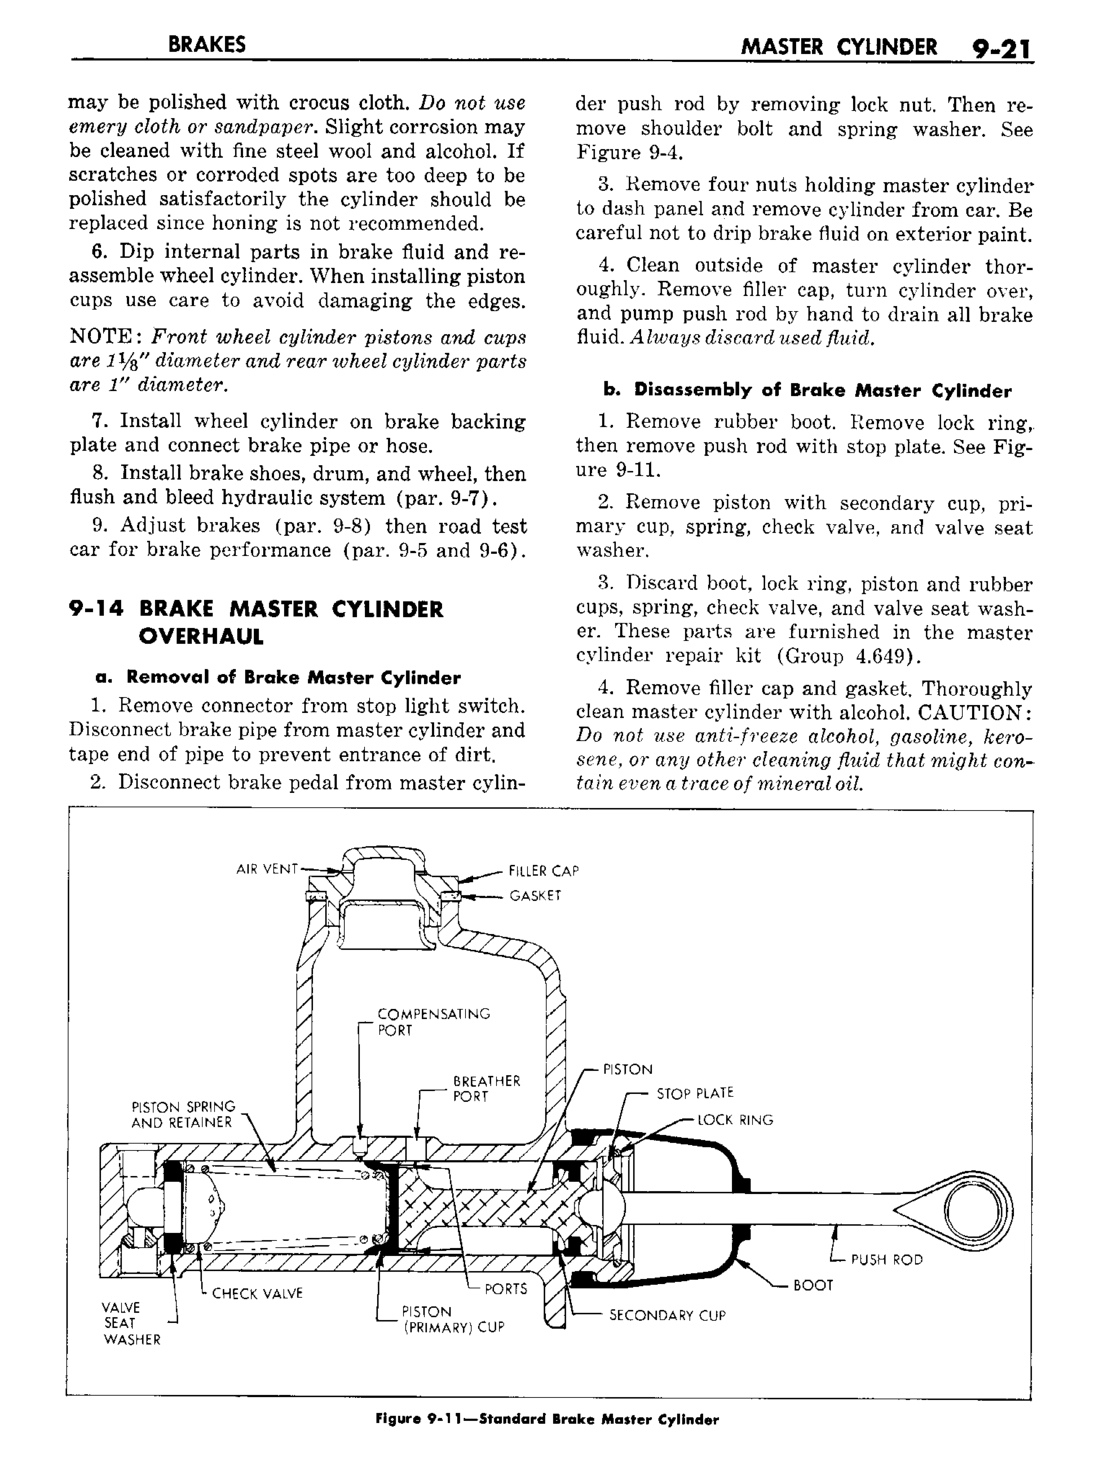 n_10 1960 Buick Shop Manual - Brakes-021-021.jpg